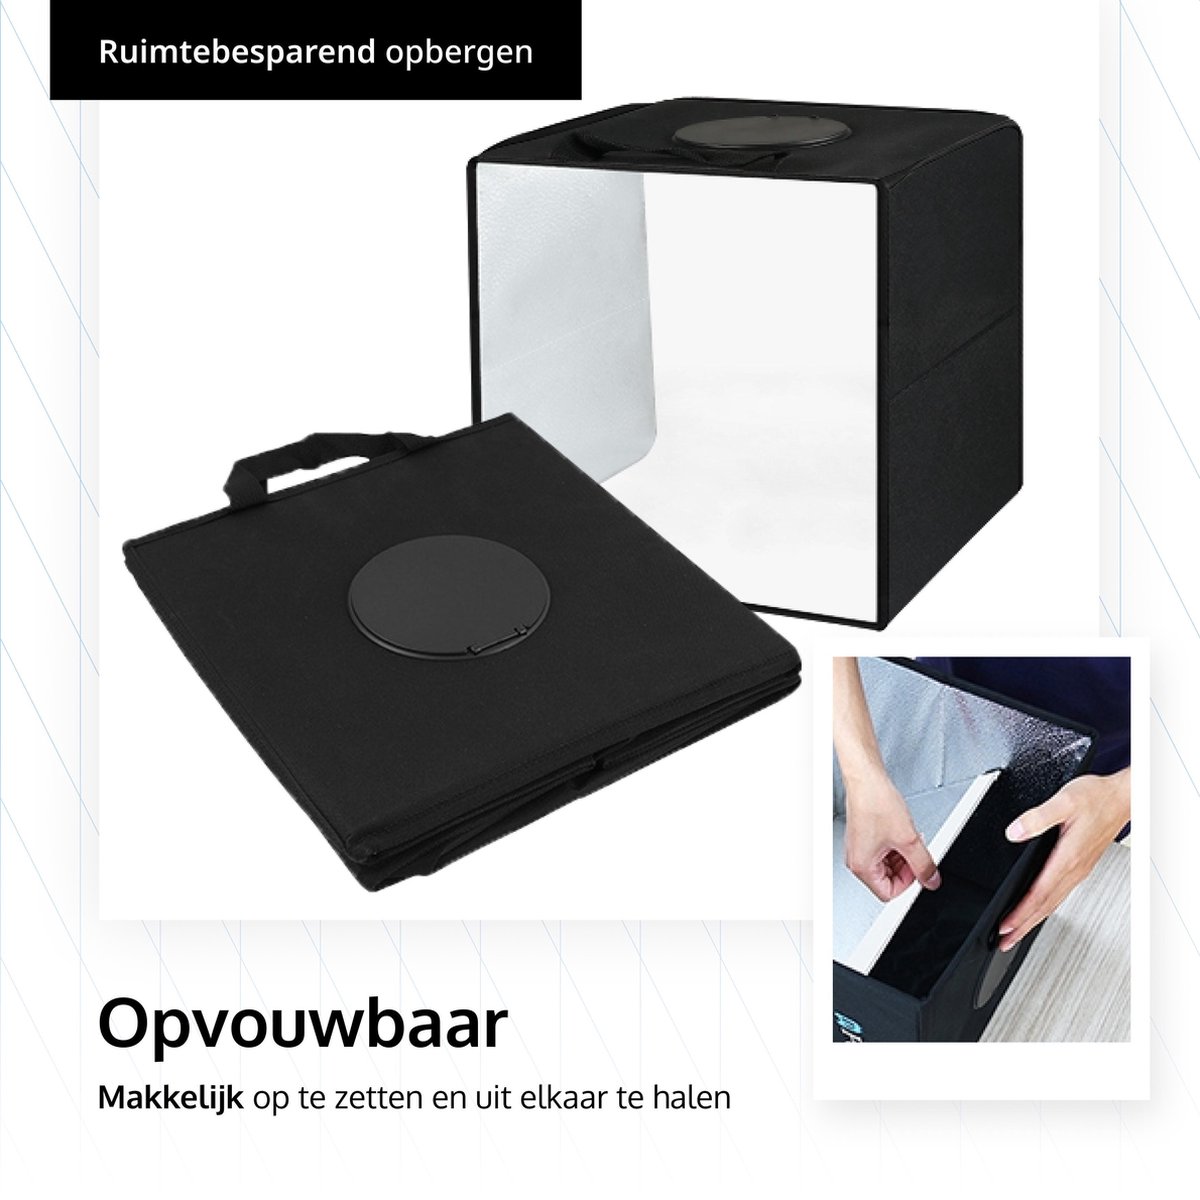 Professionele Fotostudio Box inclusief Tripod - LED verlichting - Lightbox Fotografie - Fotobox - Productfotografie Foto Studio - 30 x 30 x 30 cm - 6 Achtergronden - PULUZ